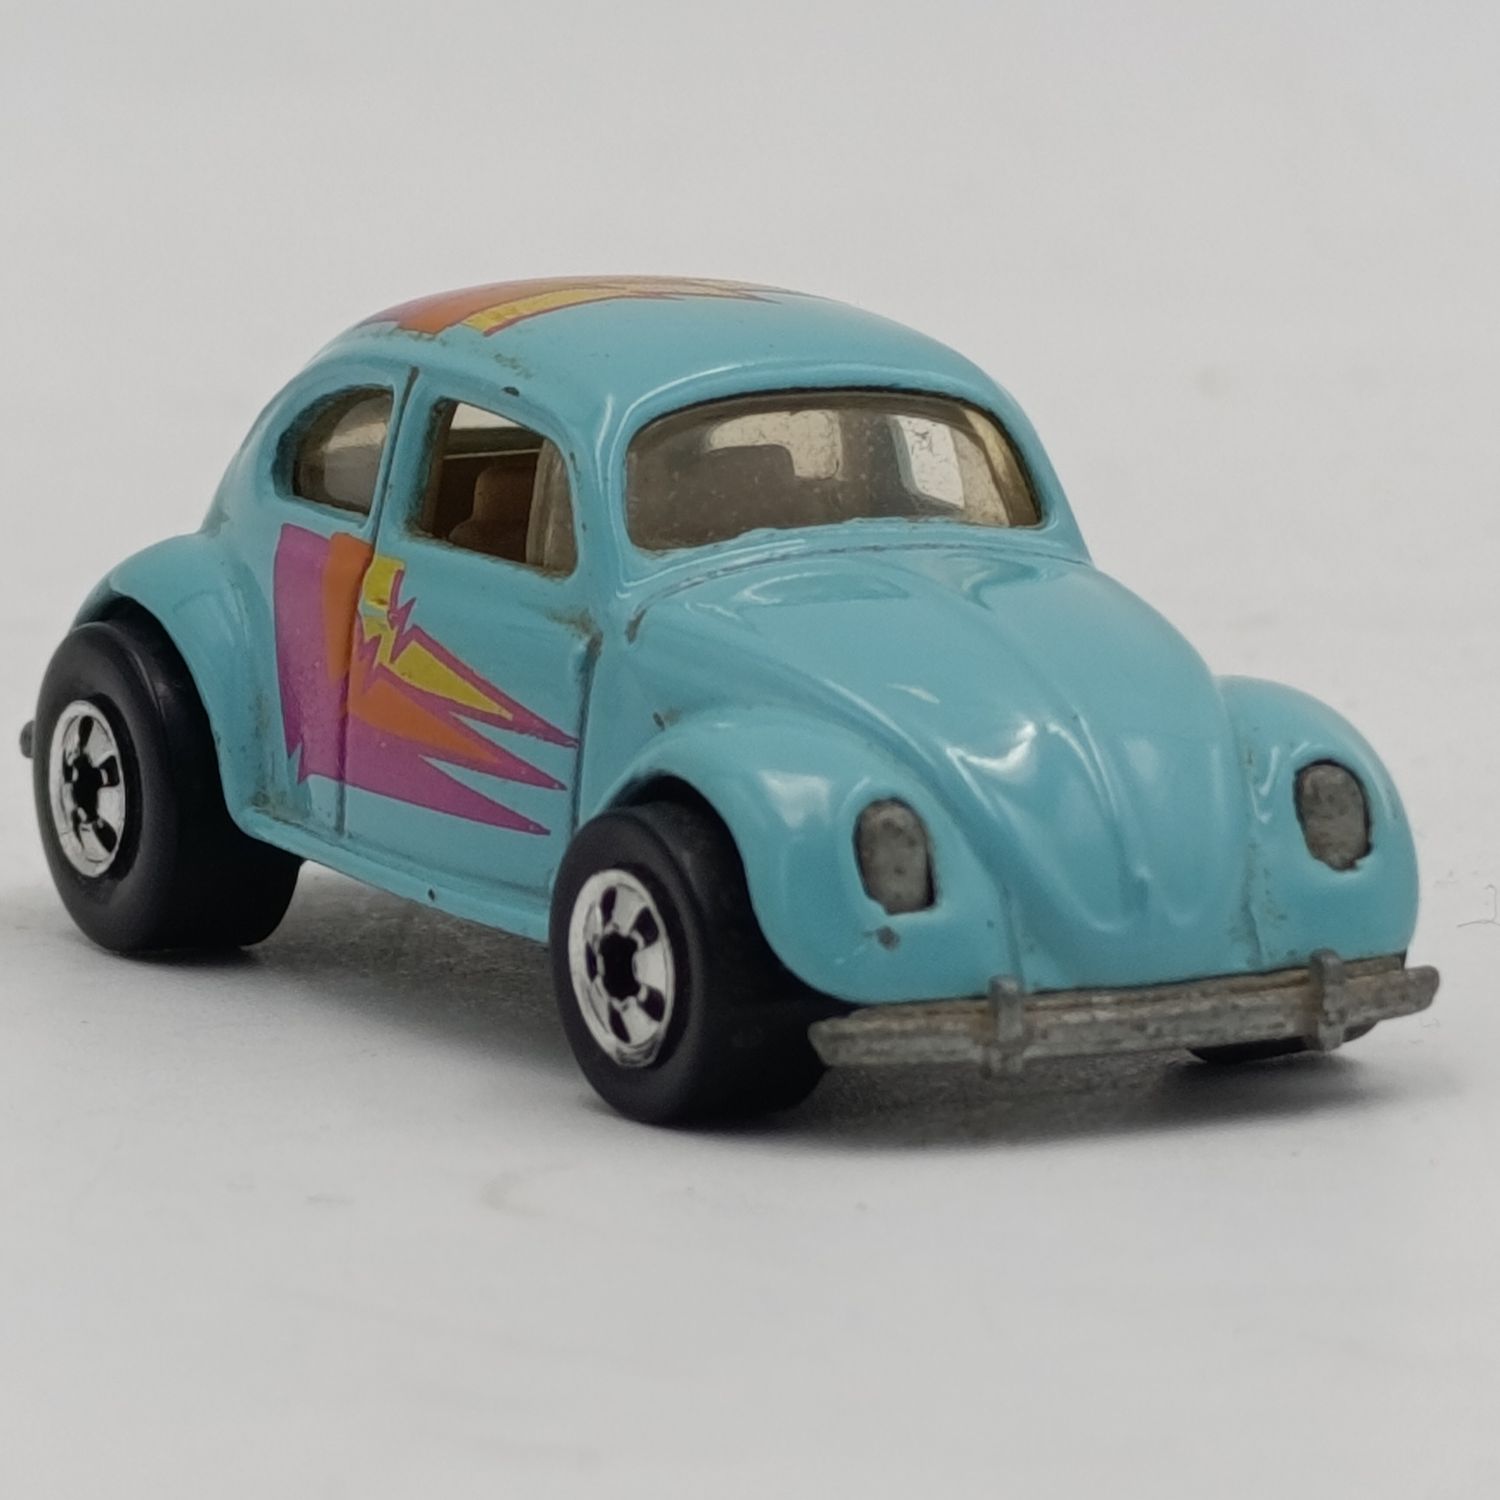 Vintage Hot Wheels Volkswagen Bug turquoise die-cast toy car